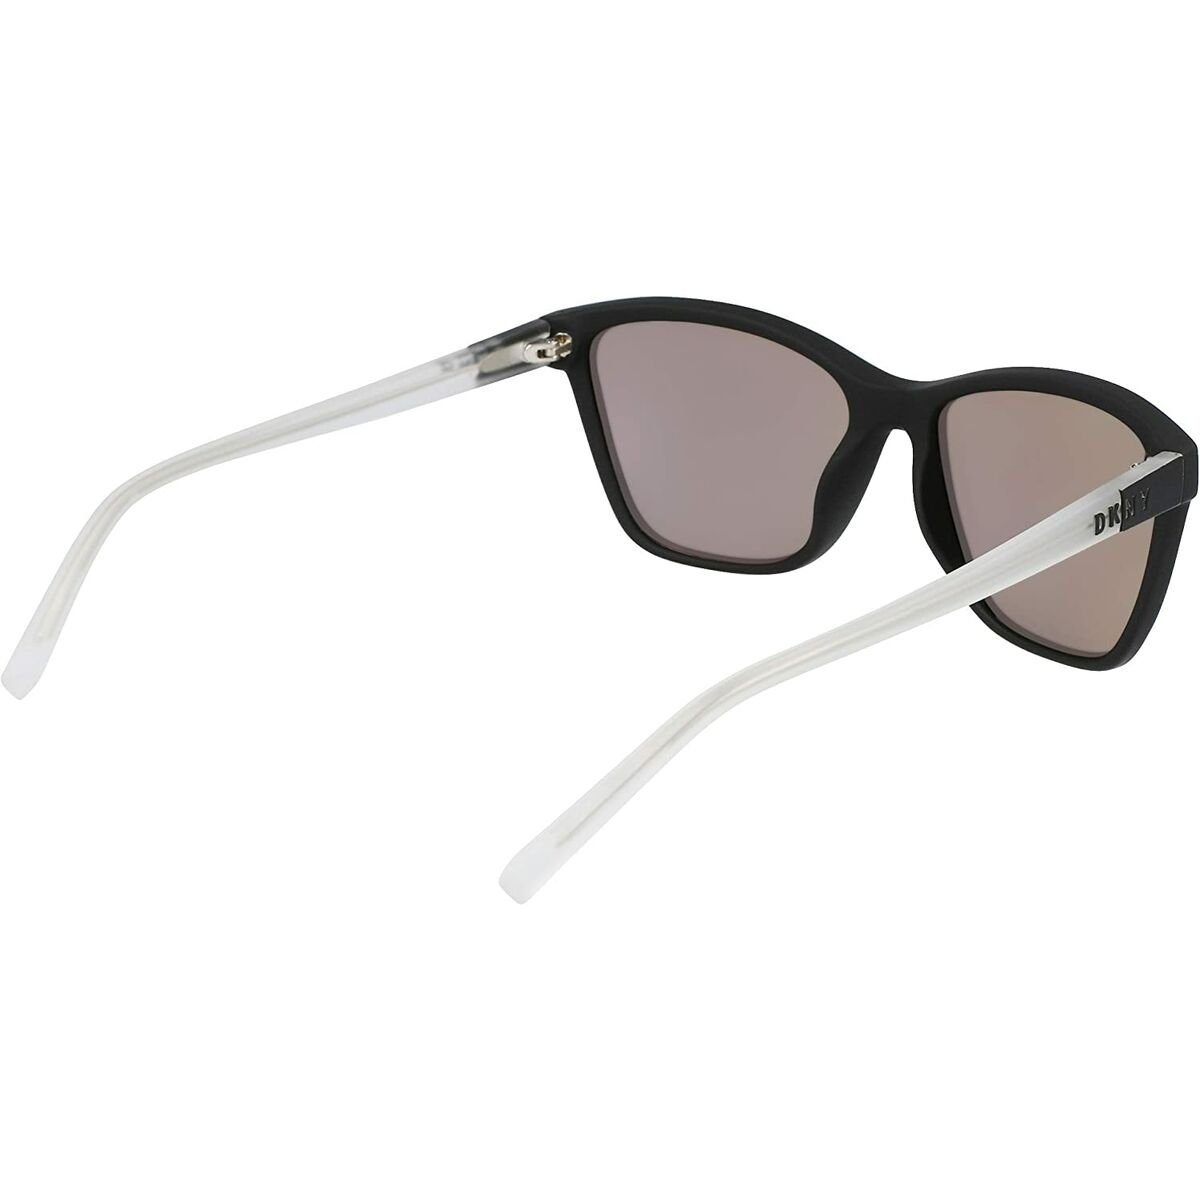 DKNY Sonnenbrille Damensonnenbrille mm DK531S-001 DKNY ø 55